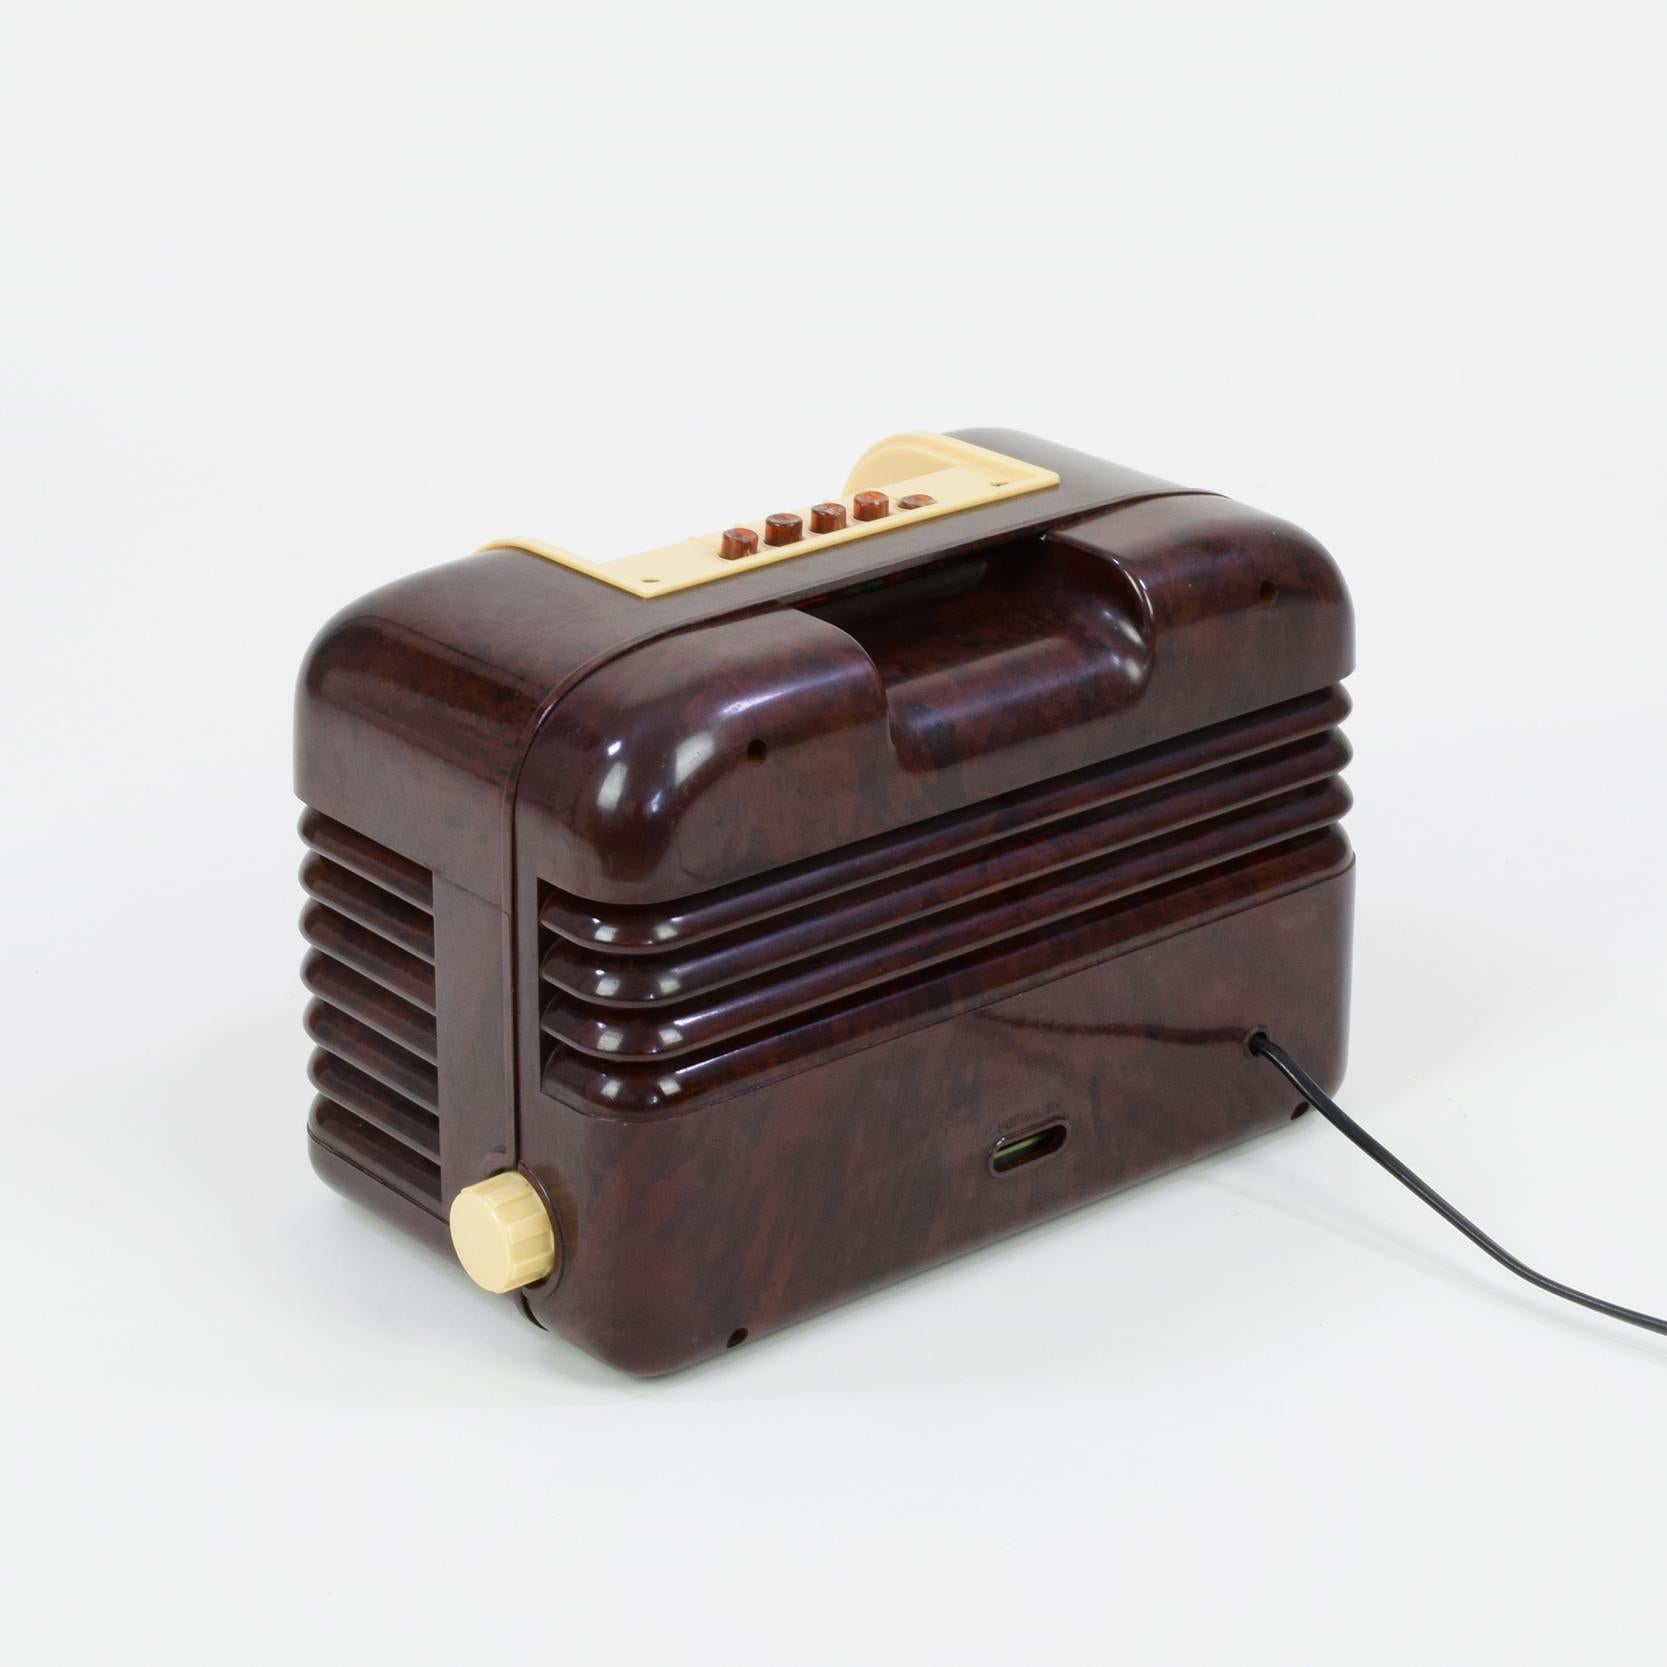 Dutch Bush DAC10 Valve/Tube Radio, 1950s Bakelite Art Deco Styling, in Working Order